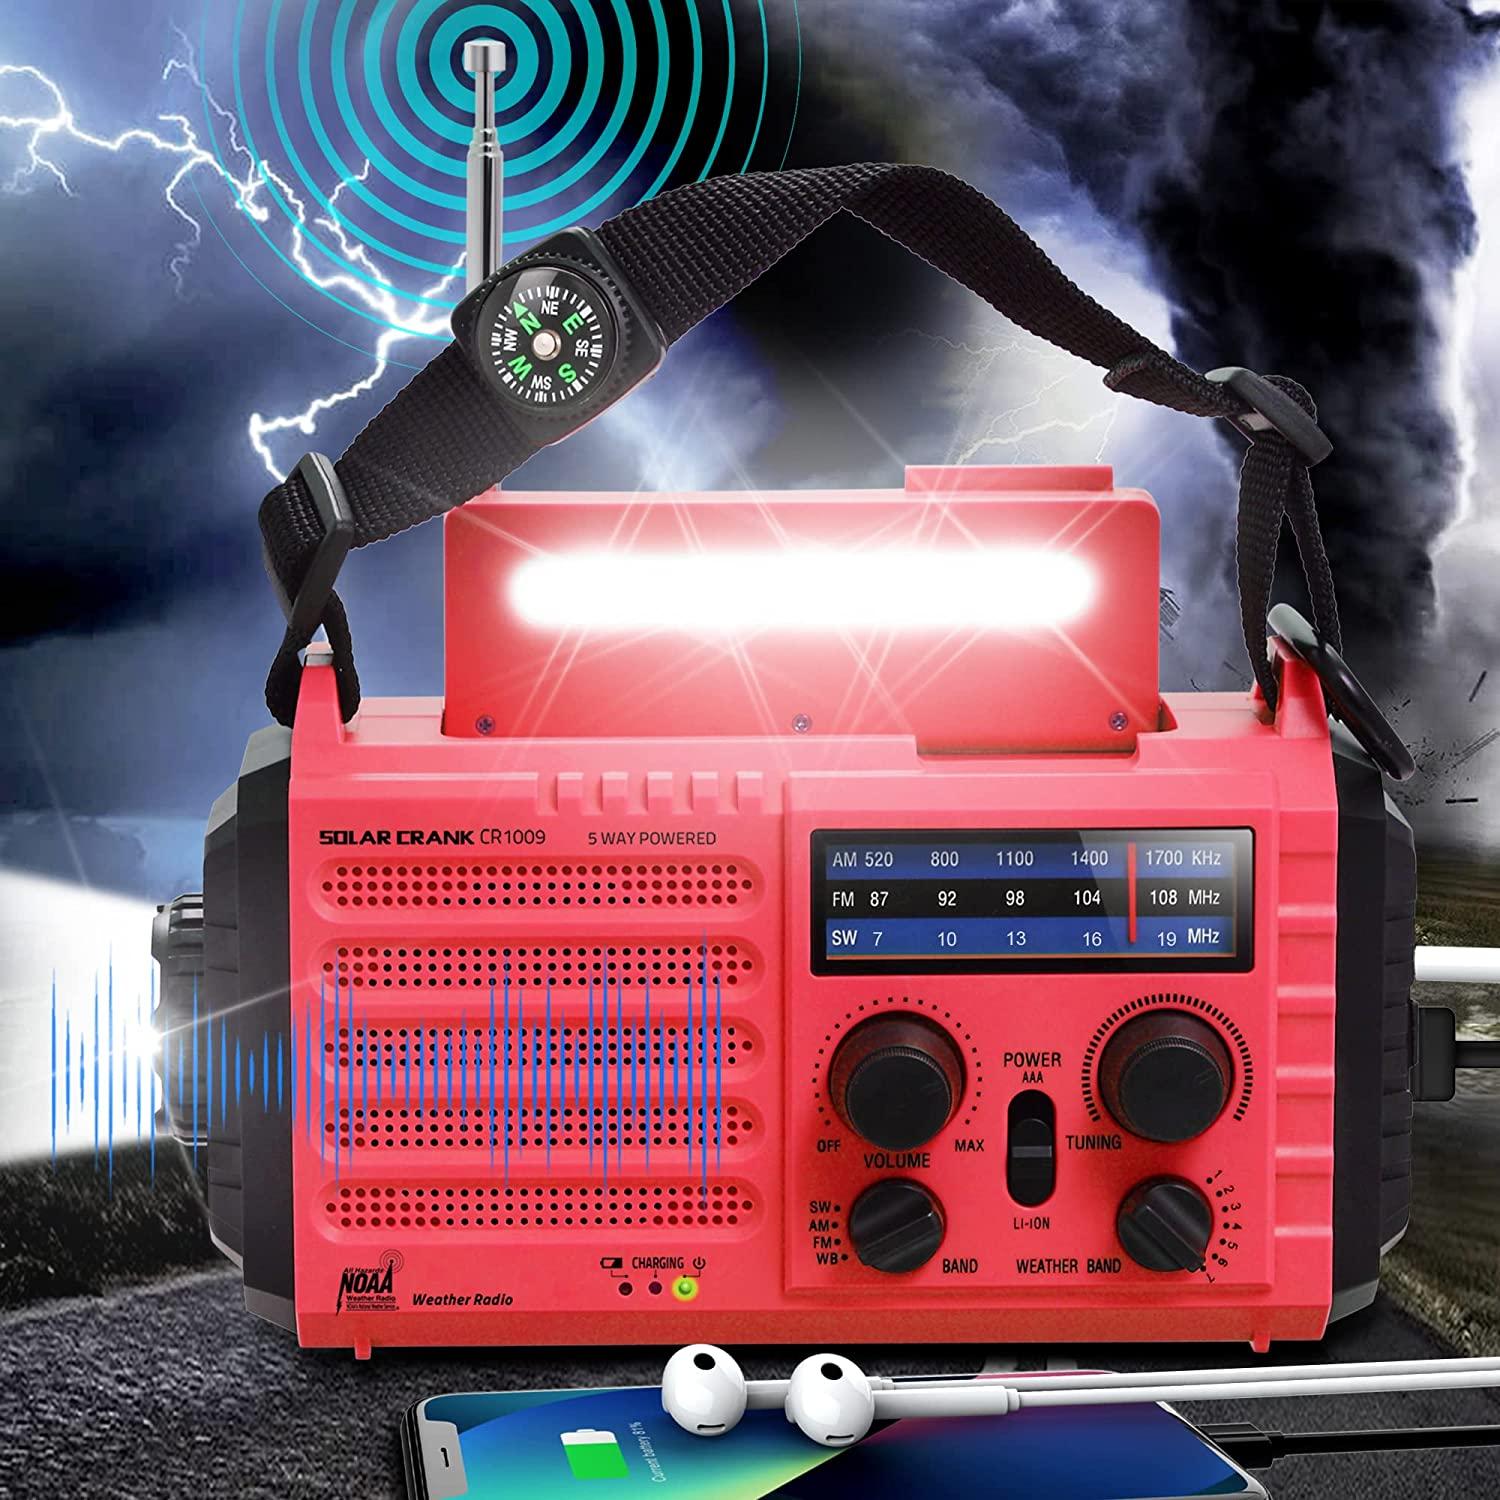 hand crank phone charger- PPLEE weather alert radio